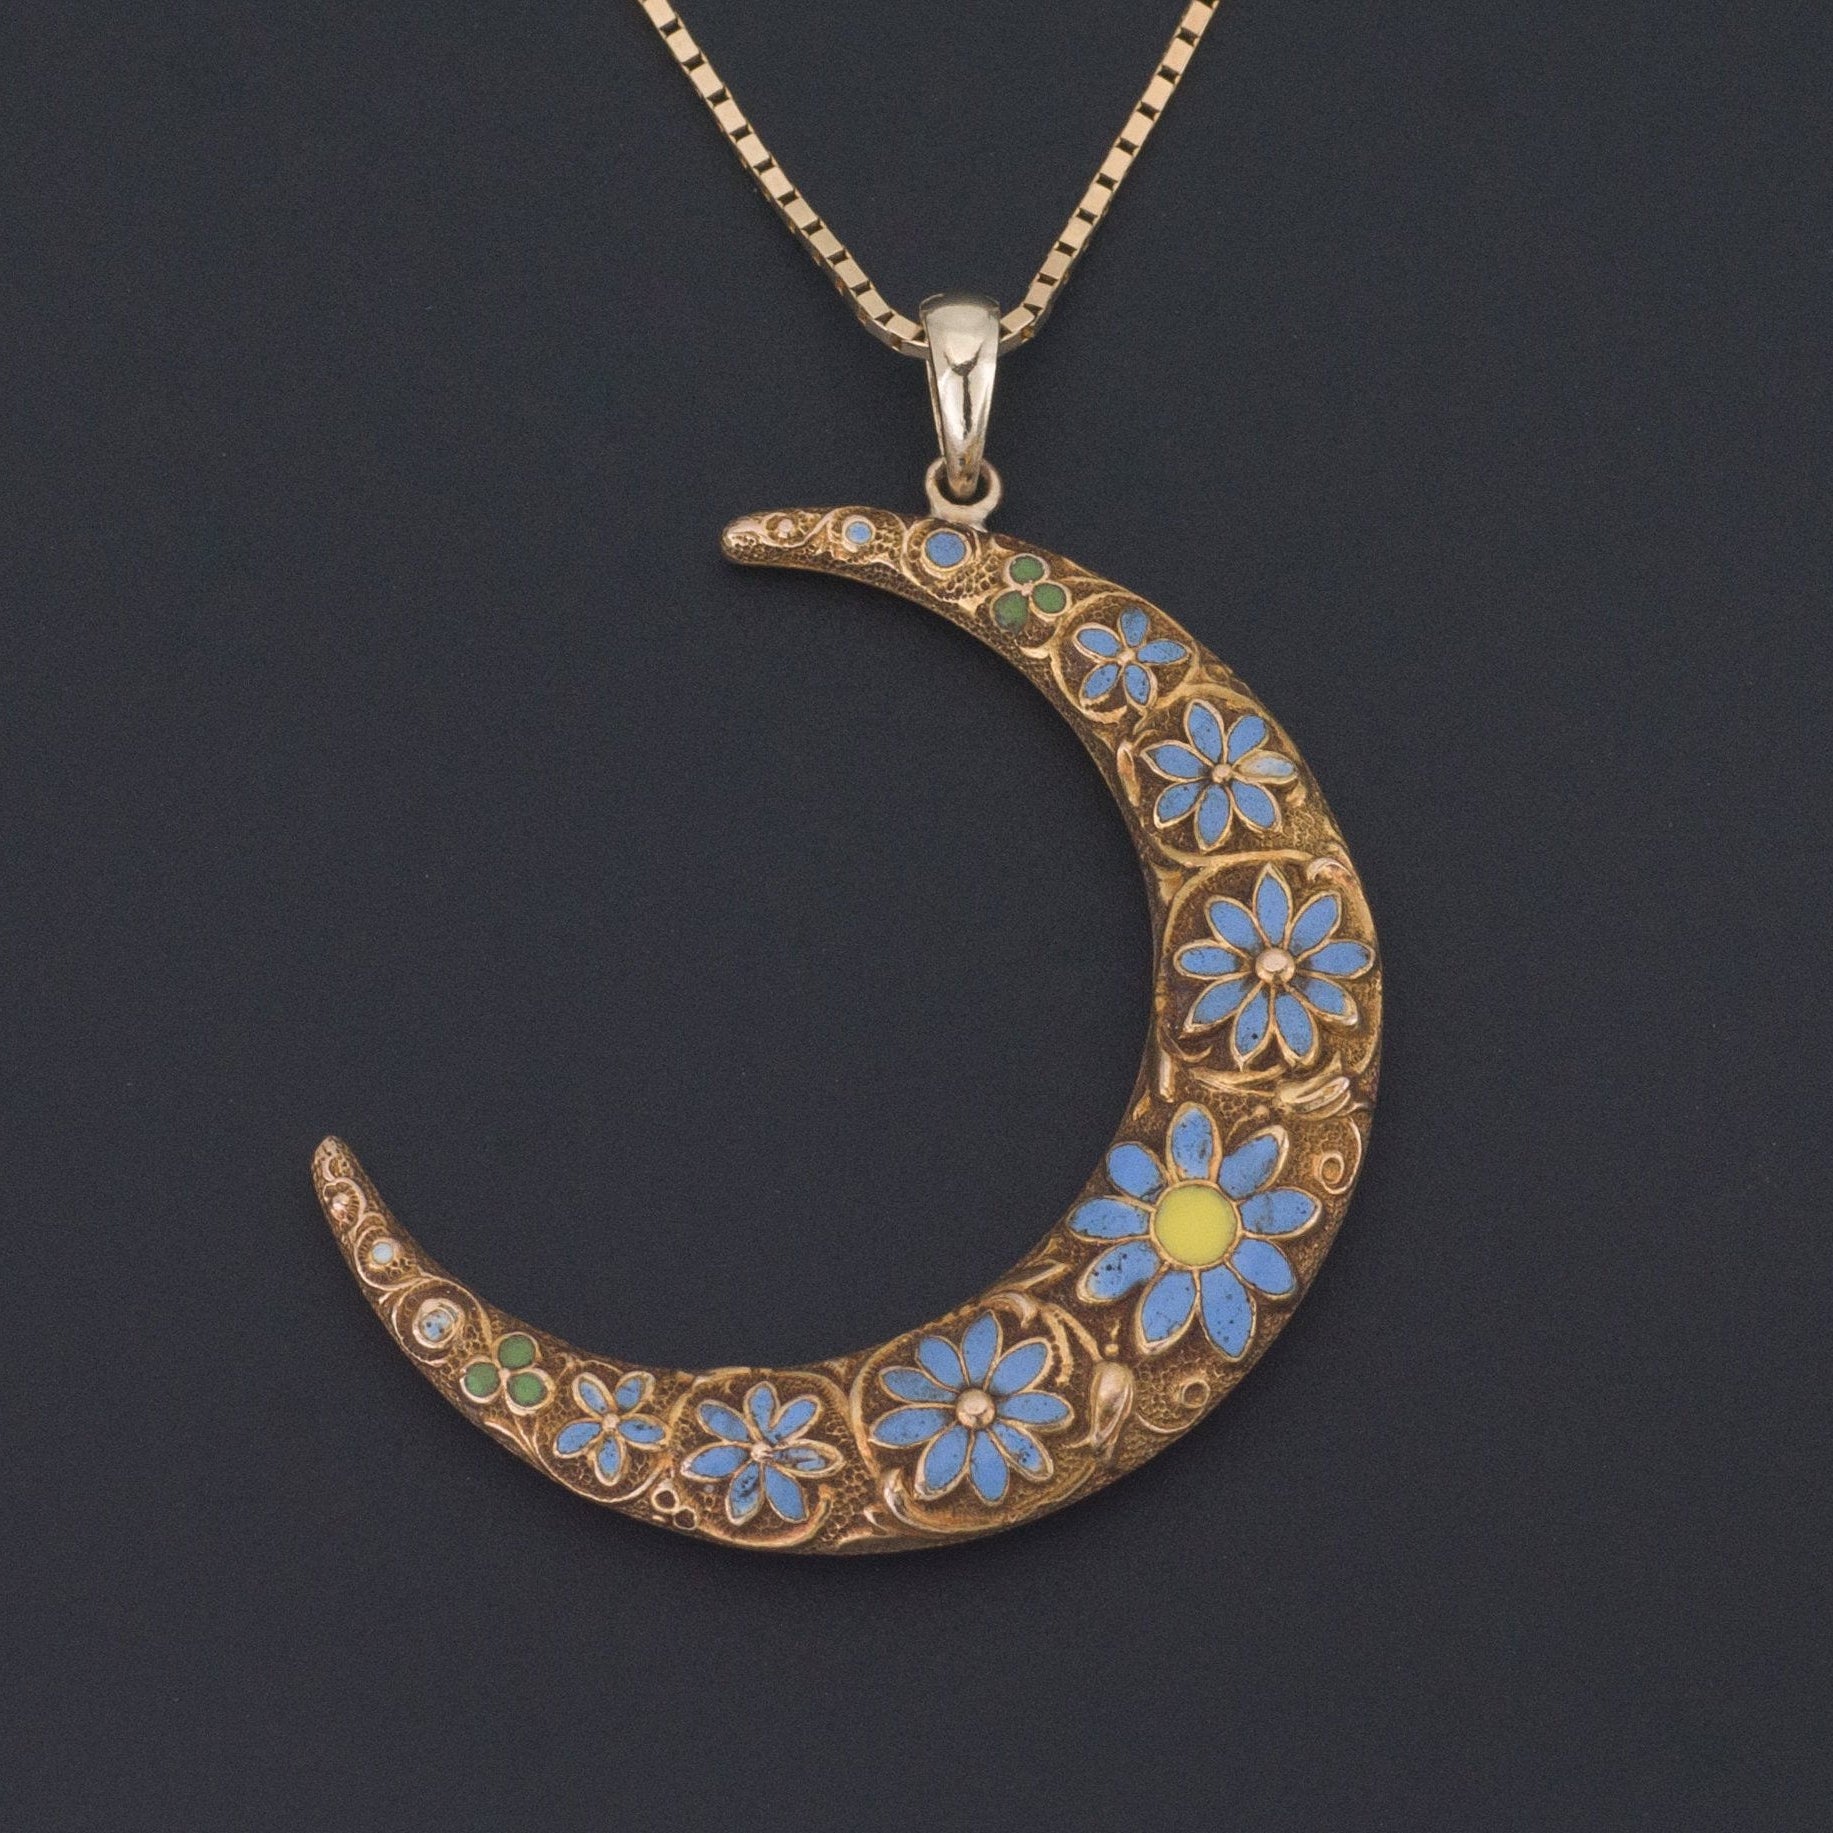 Crescent Moon | Forget-me-not Crescent Pendant | Large 14k Gold Crescent Moon Pendant | 14k Gold | Antique Pin Conversion Pendant